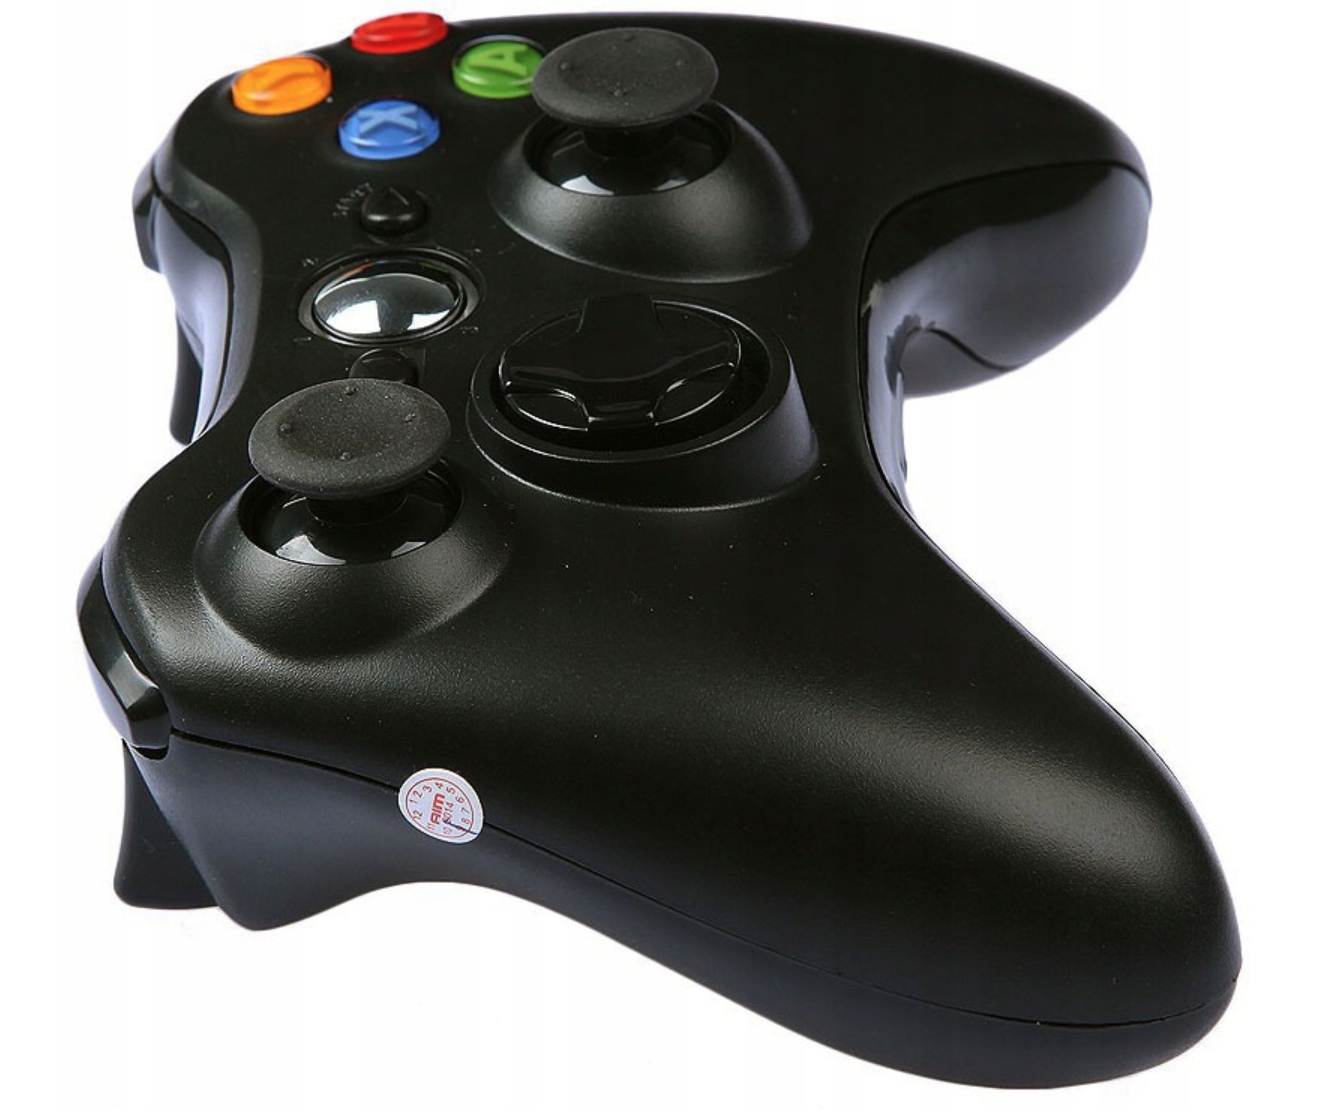 Джойстик х бокс. Джойстик Xbox 360. Геймпад Xbox 360 Controller. Джойстик Xbox 360 беспроводной. Геймпад для Xbox 360 (черный).